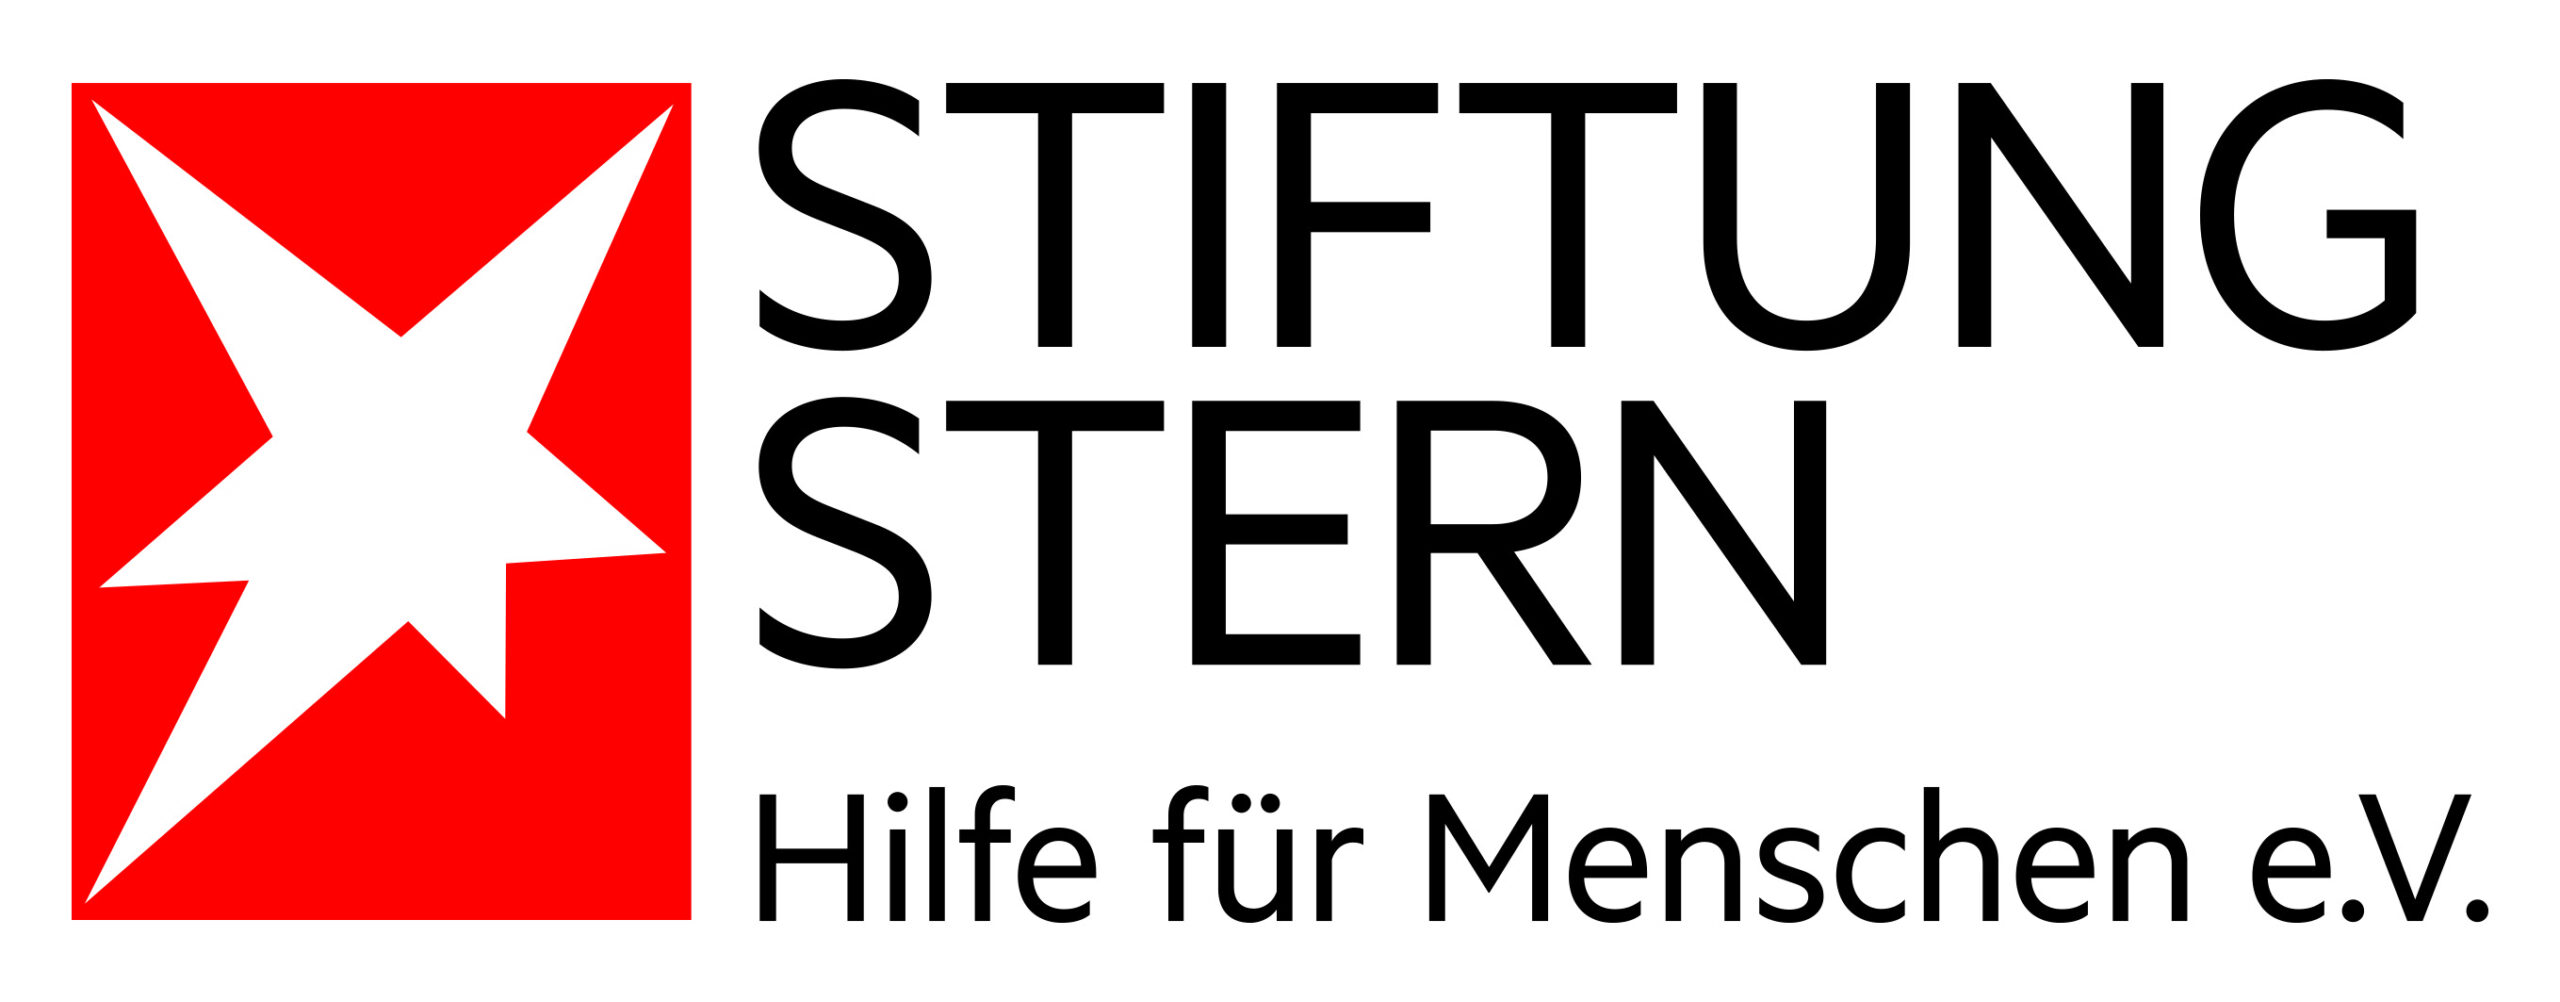 Stiftung Stern logo